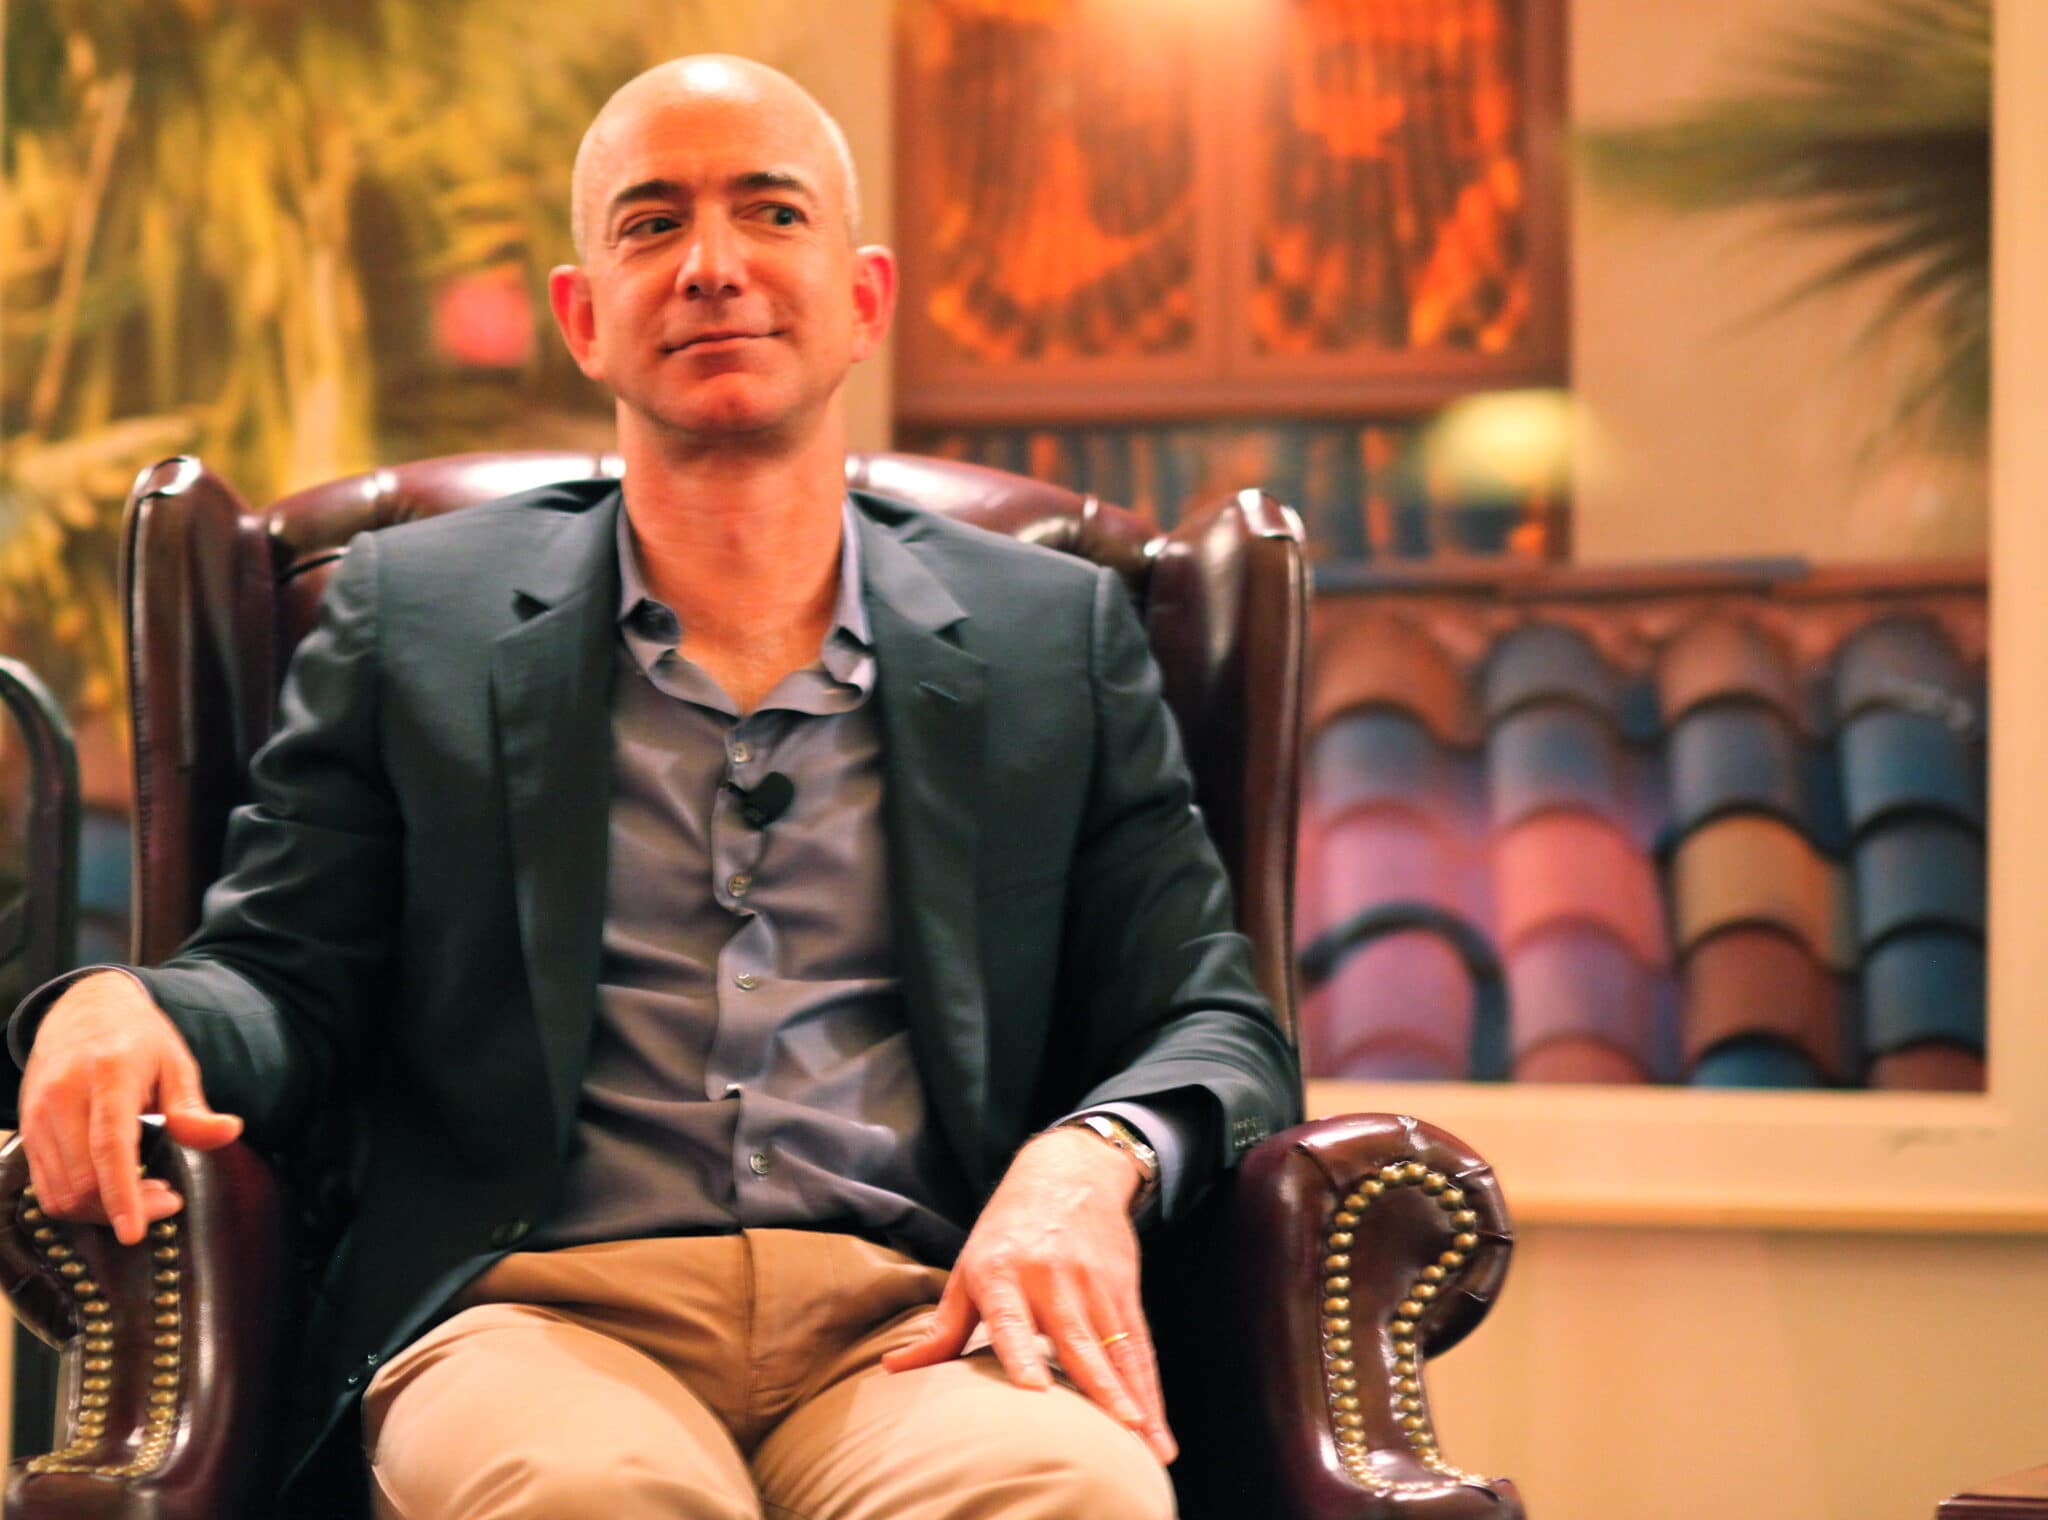 Photo of Jeff Bezos sitting on a victorian leather chair, taken by Steve Jurvetson